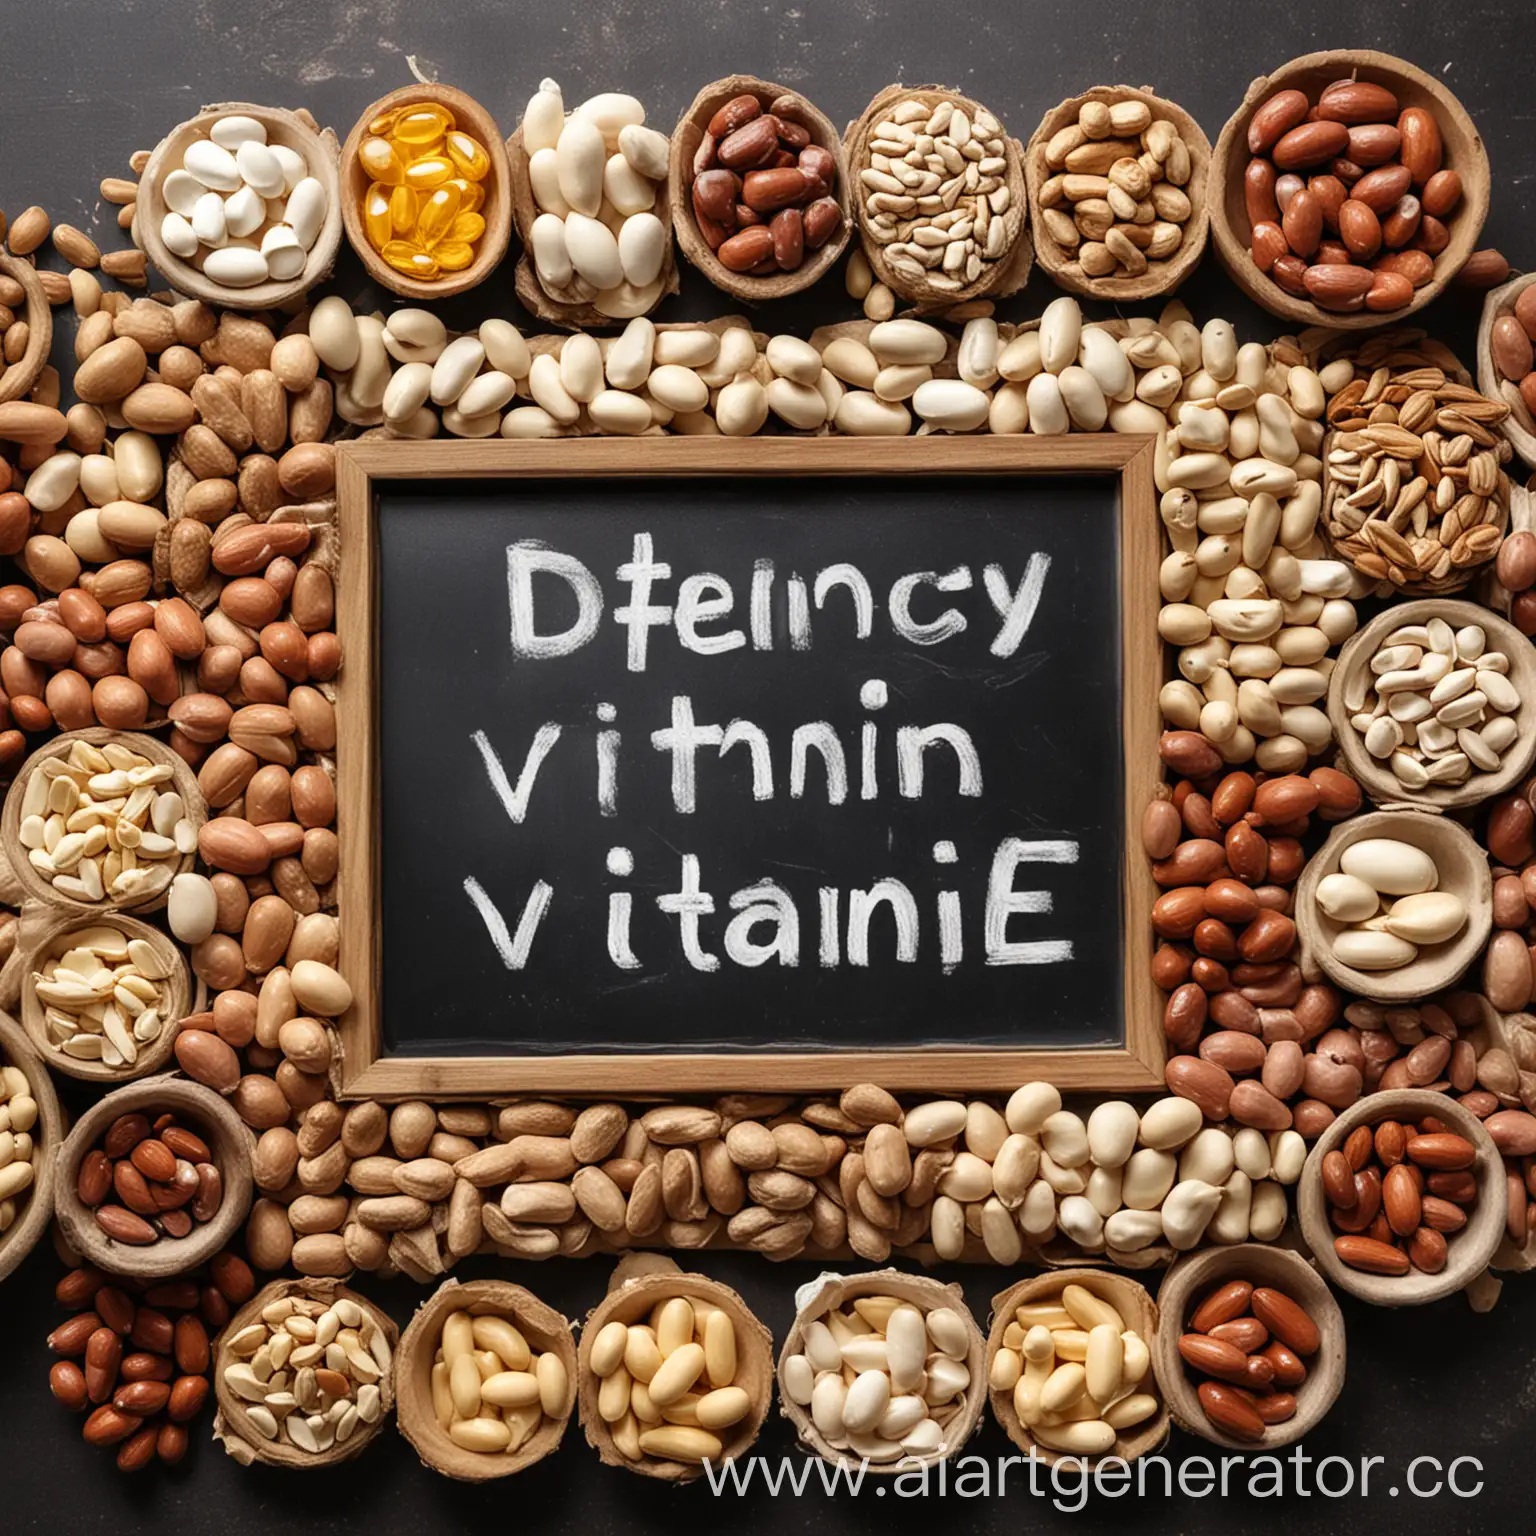 Deficiency of vitamin E